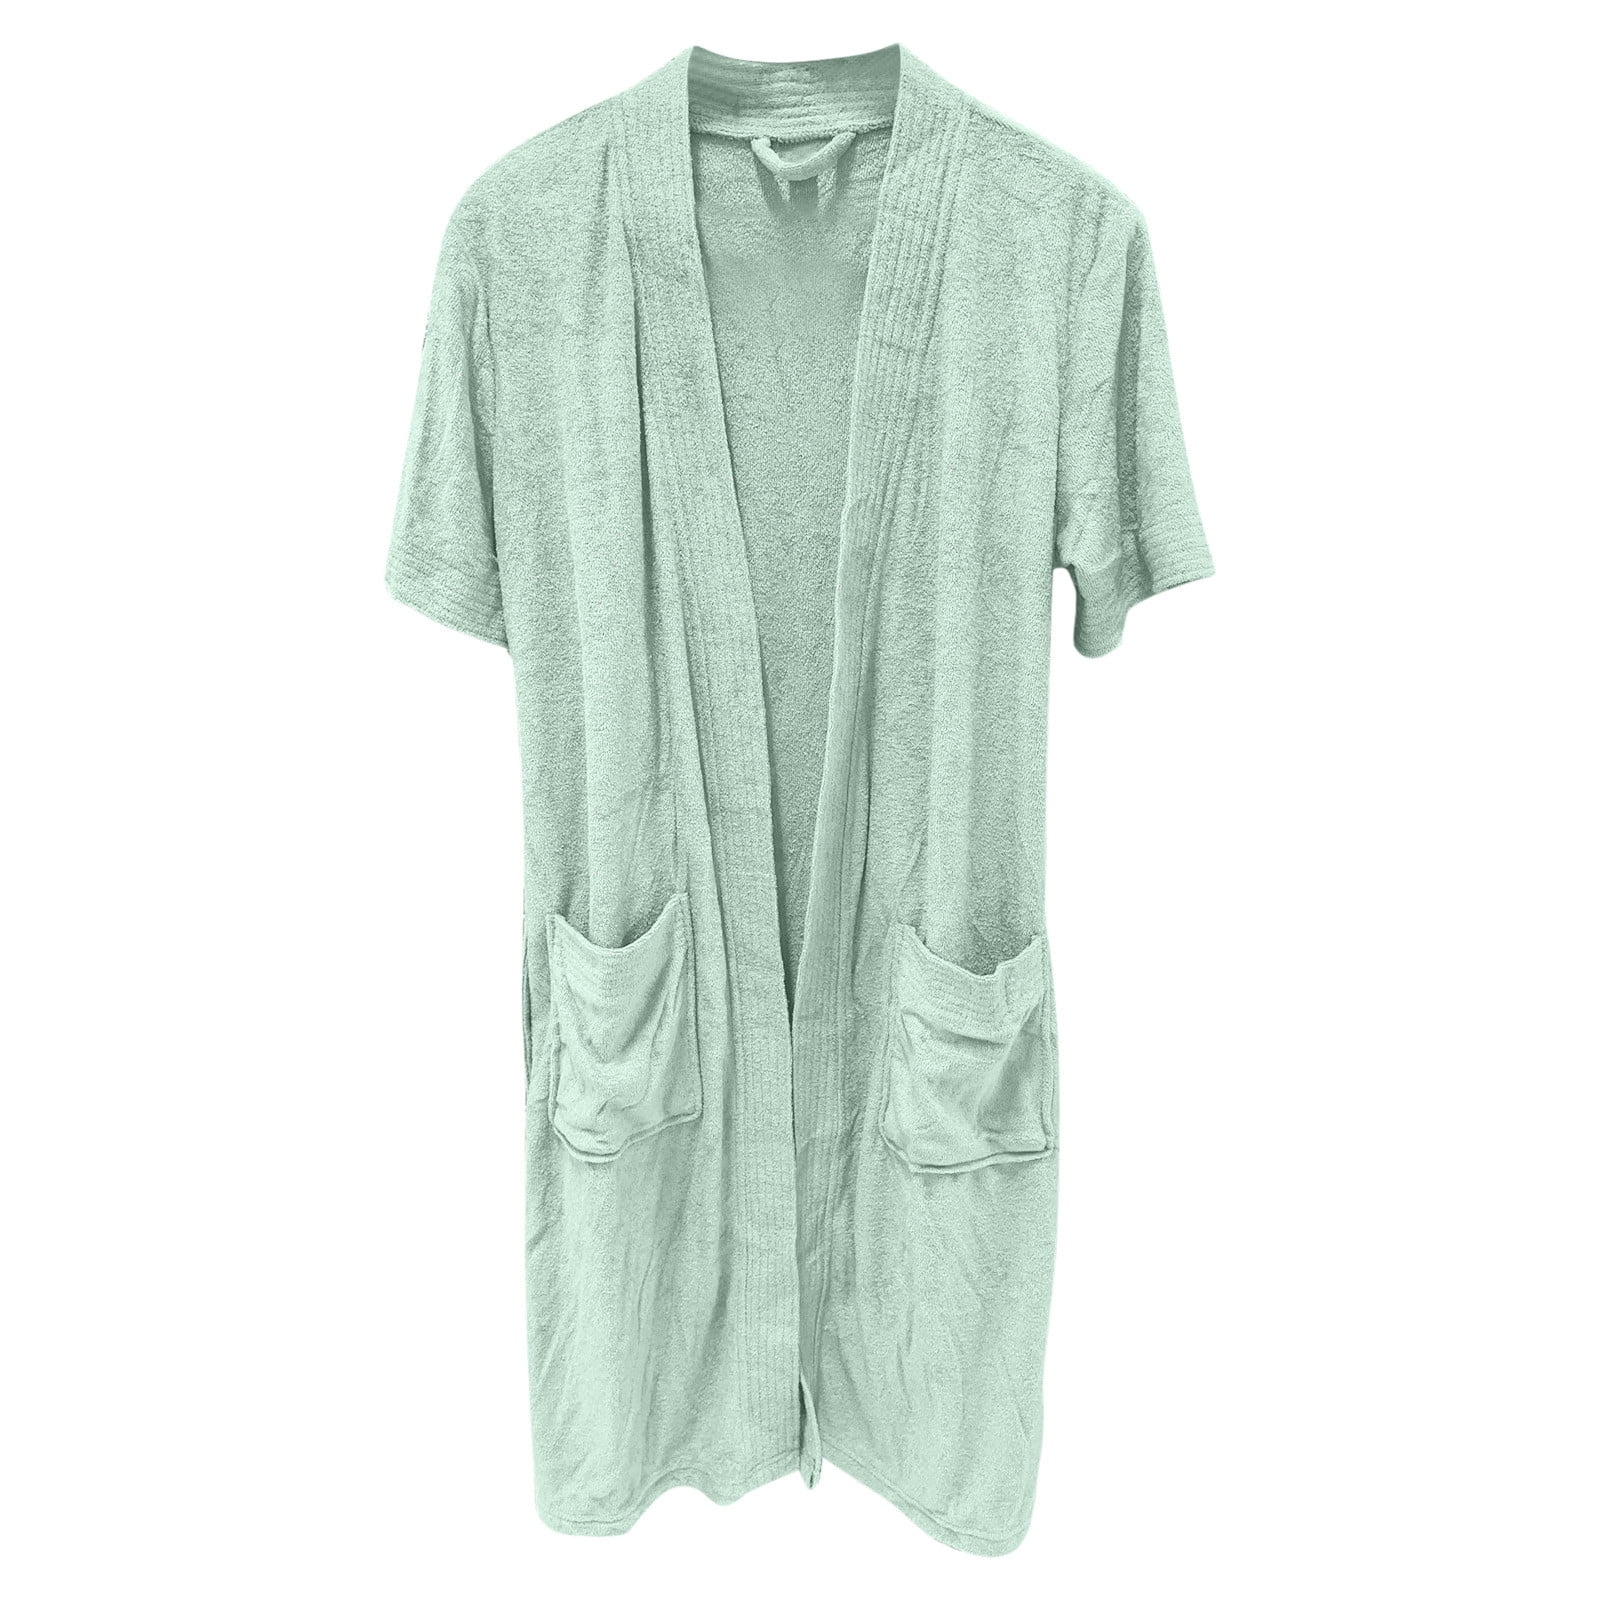 Qxutpo Mens Pajamas Set Home Bathrobe Towel Material Thin Short Sleeved ...